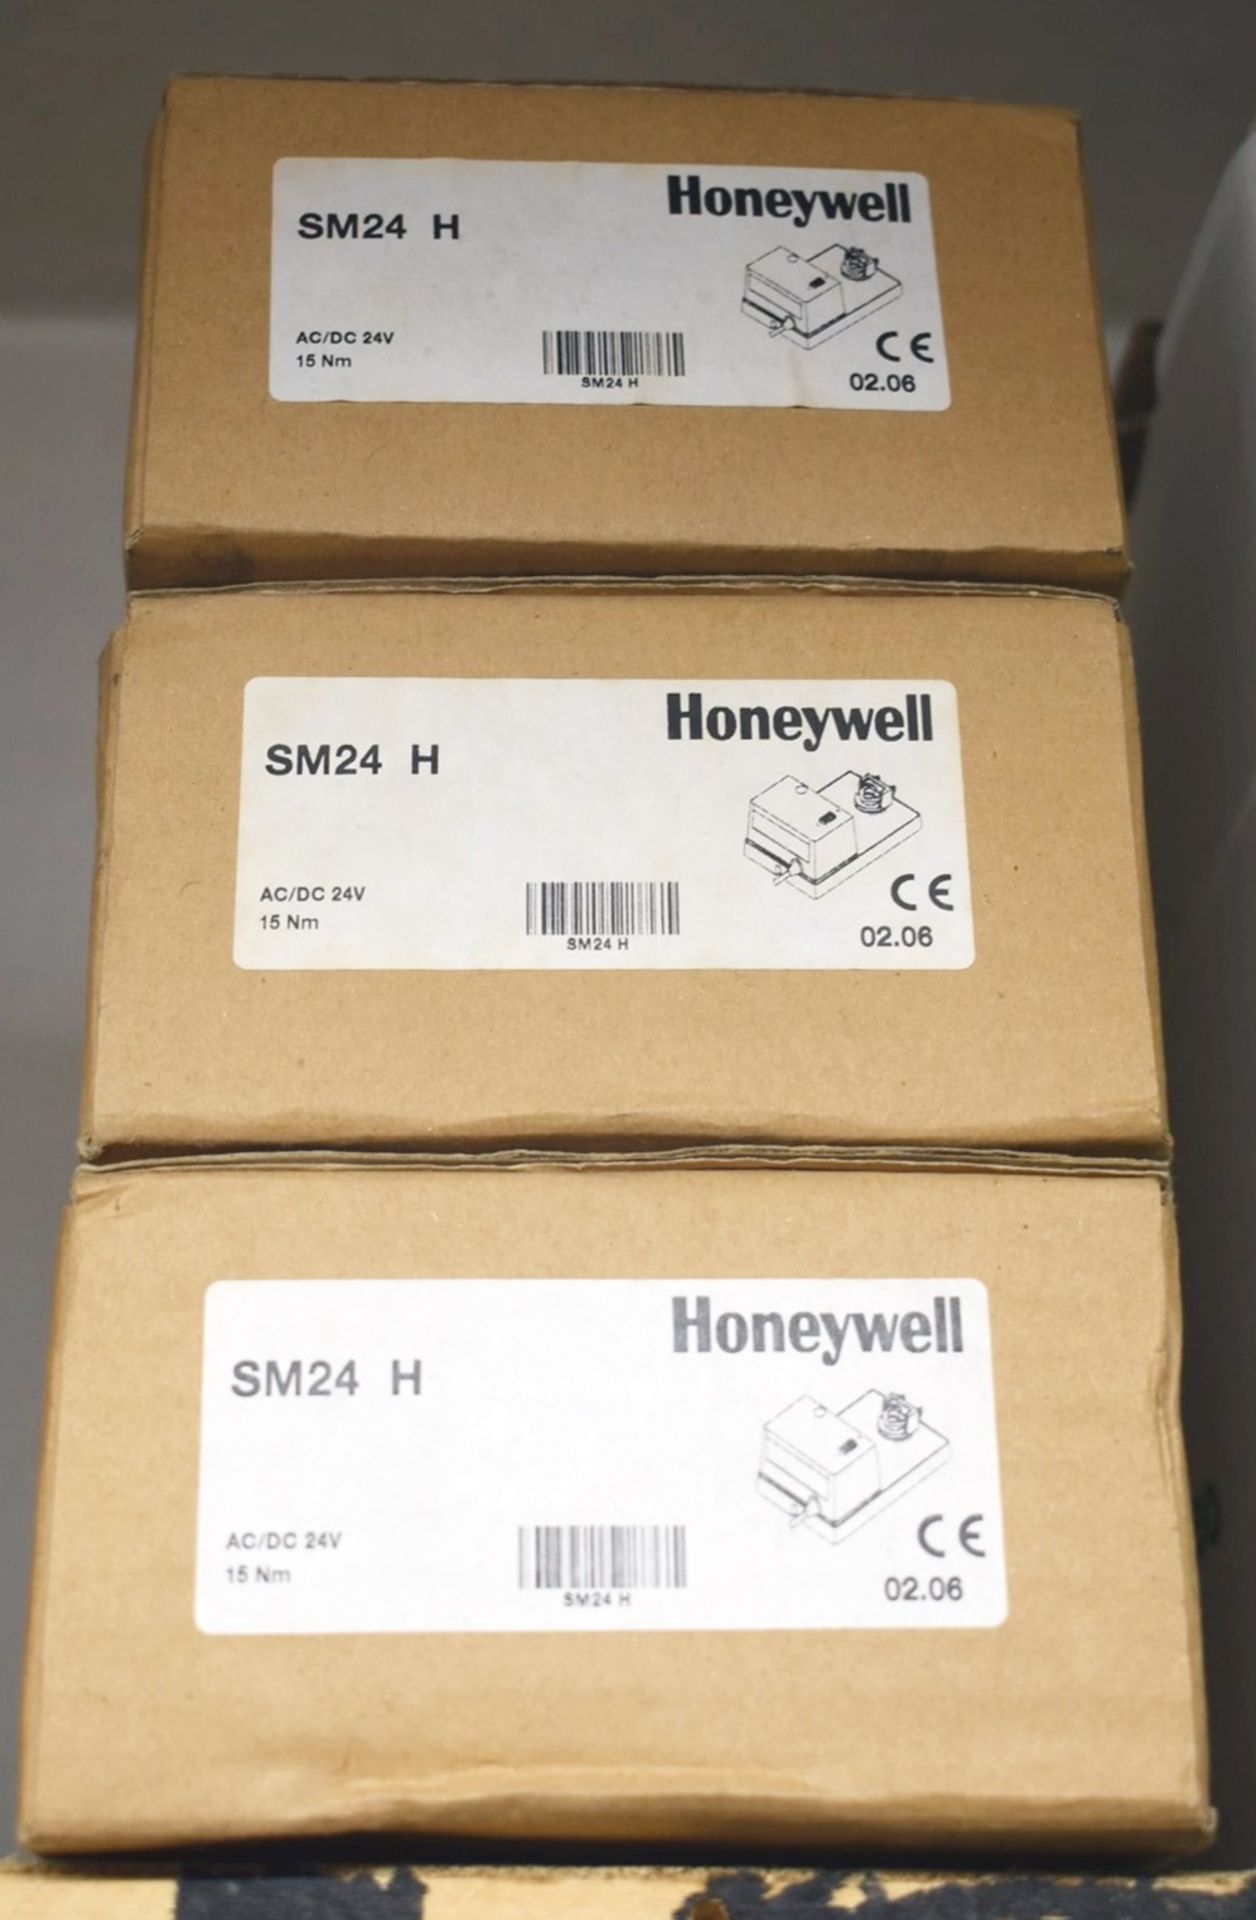 3 x Honeywell SM24 H Actuators - Unused Boxed Stock - Ref: TBC - CL816 - Location: Birmingham, B45<p